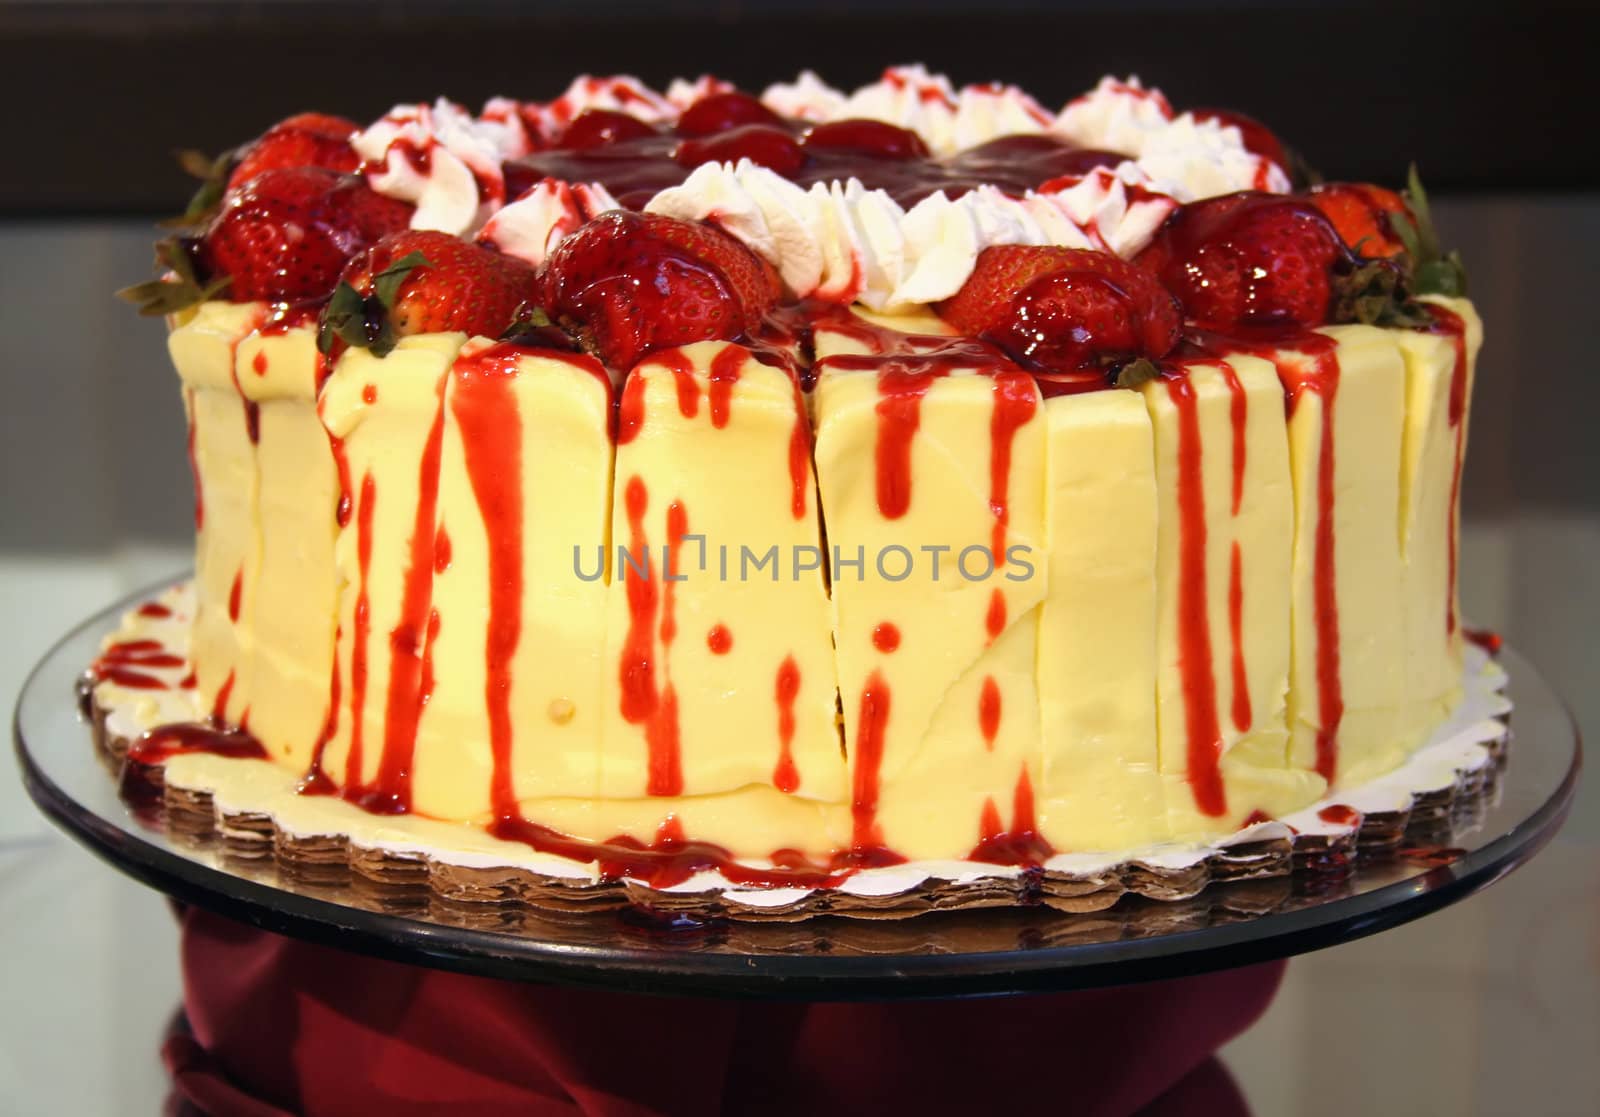 Strawberry cake on cake plate

